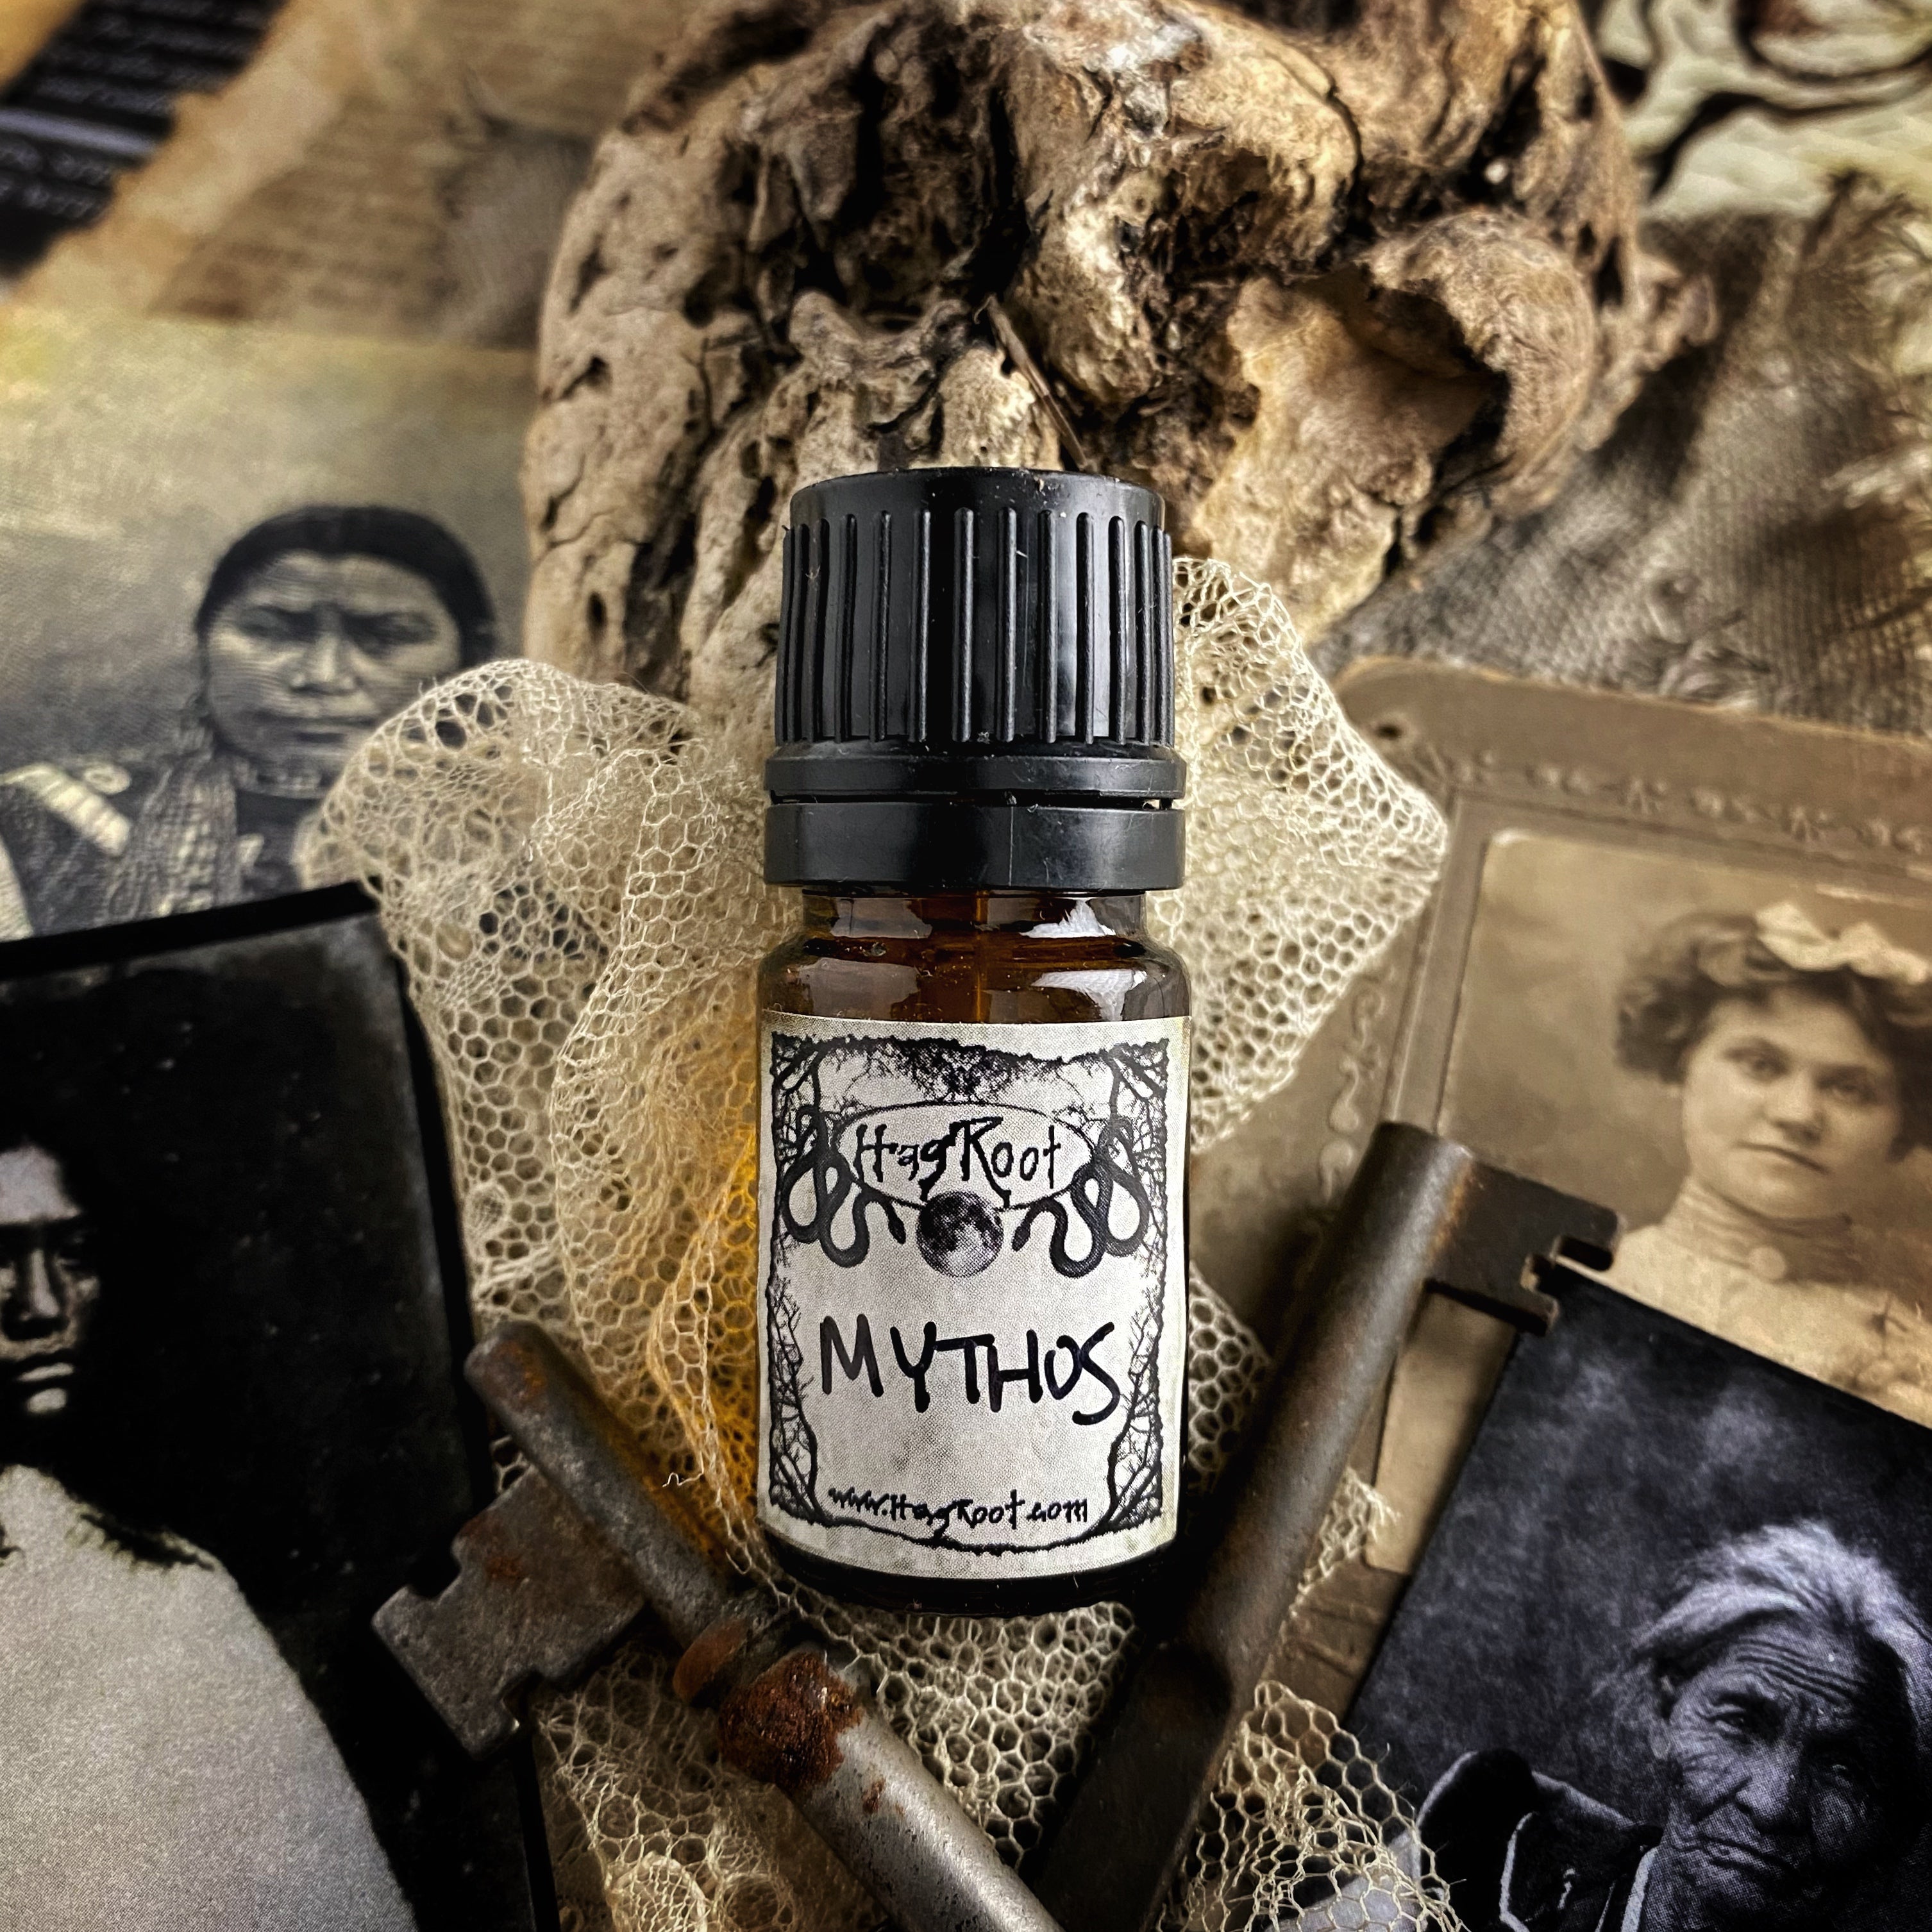 MYTHOS-(Pine, Mint, Vetiver, Frankincense, Cedar, Leather, Patchouli, Saffron)-Perfume, Cologne, Anointing, Ritual Oil